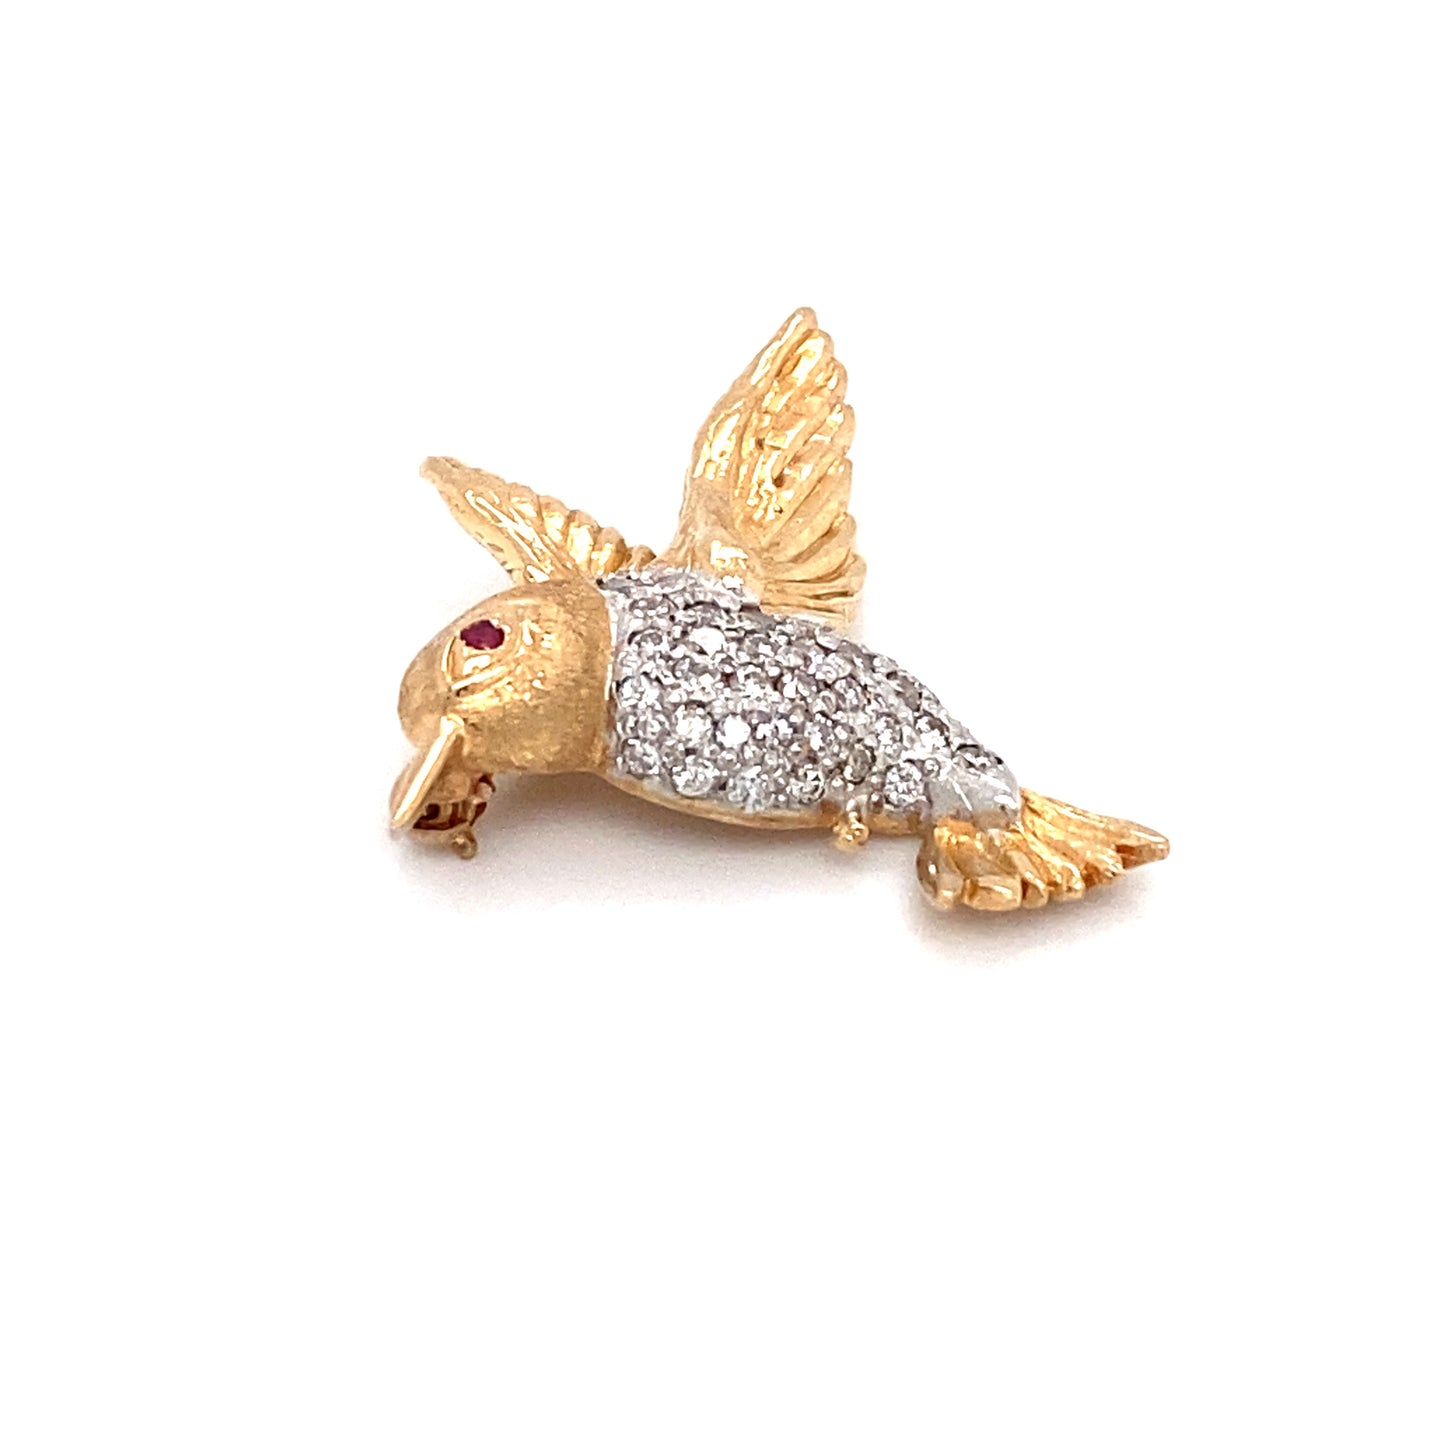 Circa 1940s Diamond Hummingbird Brooch in 14K Gold